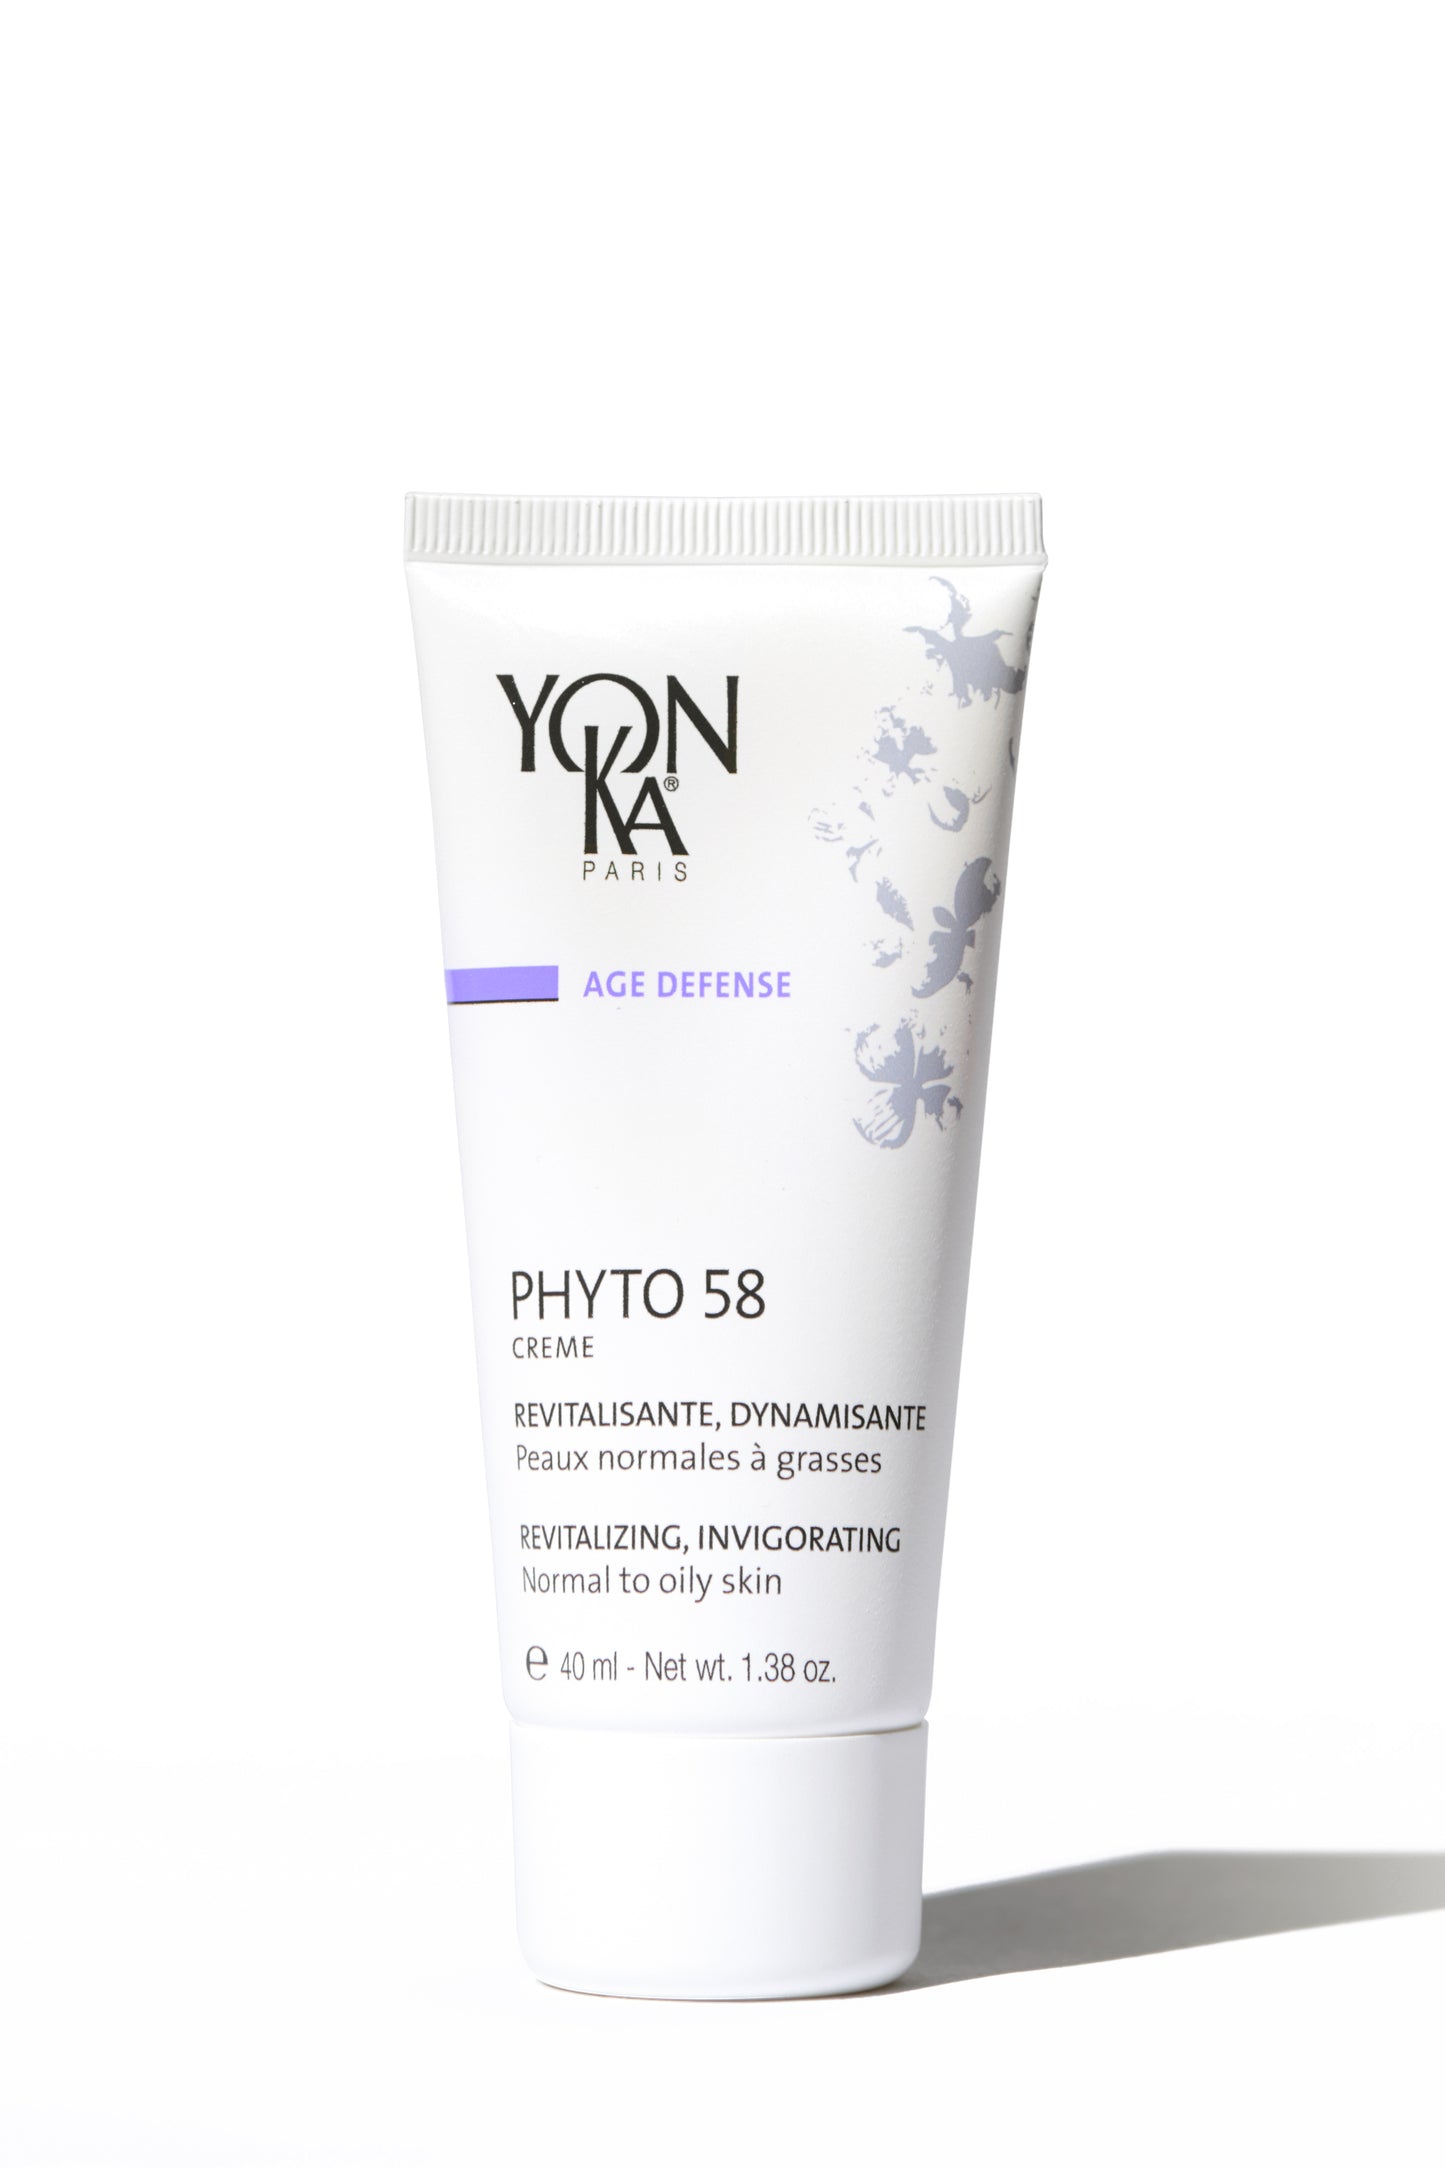 PHYTO 58 YON-KA Revitalising, energizing, normal to oily skin